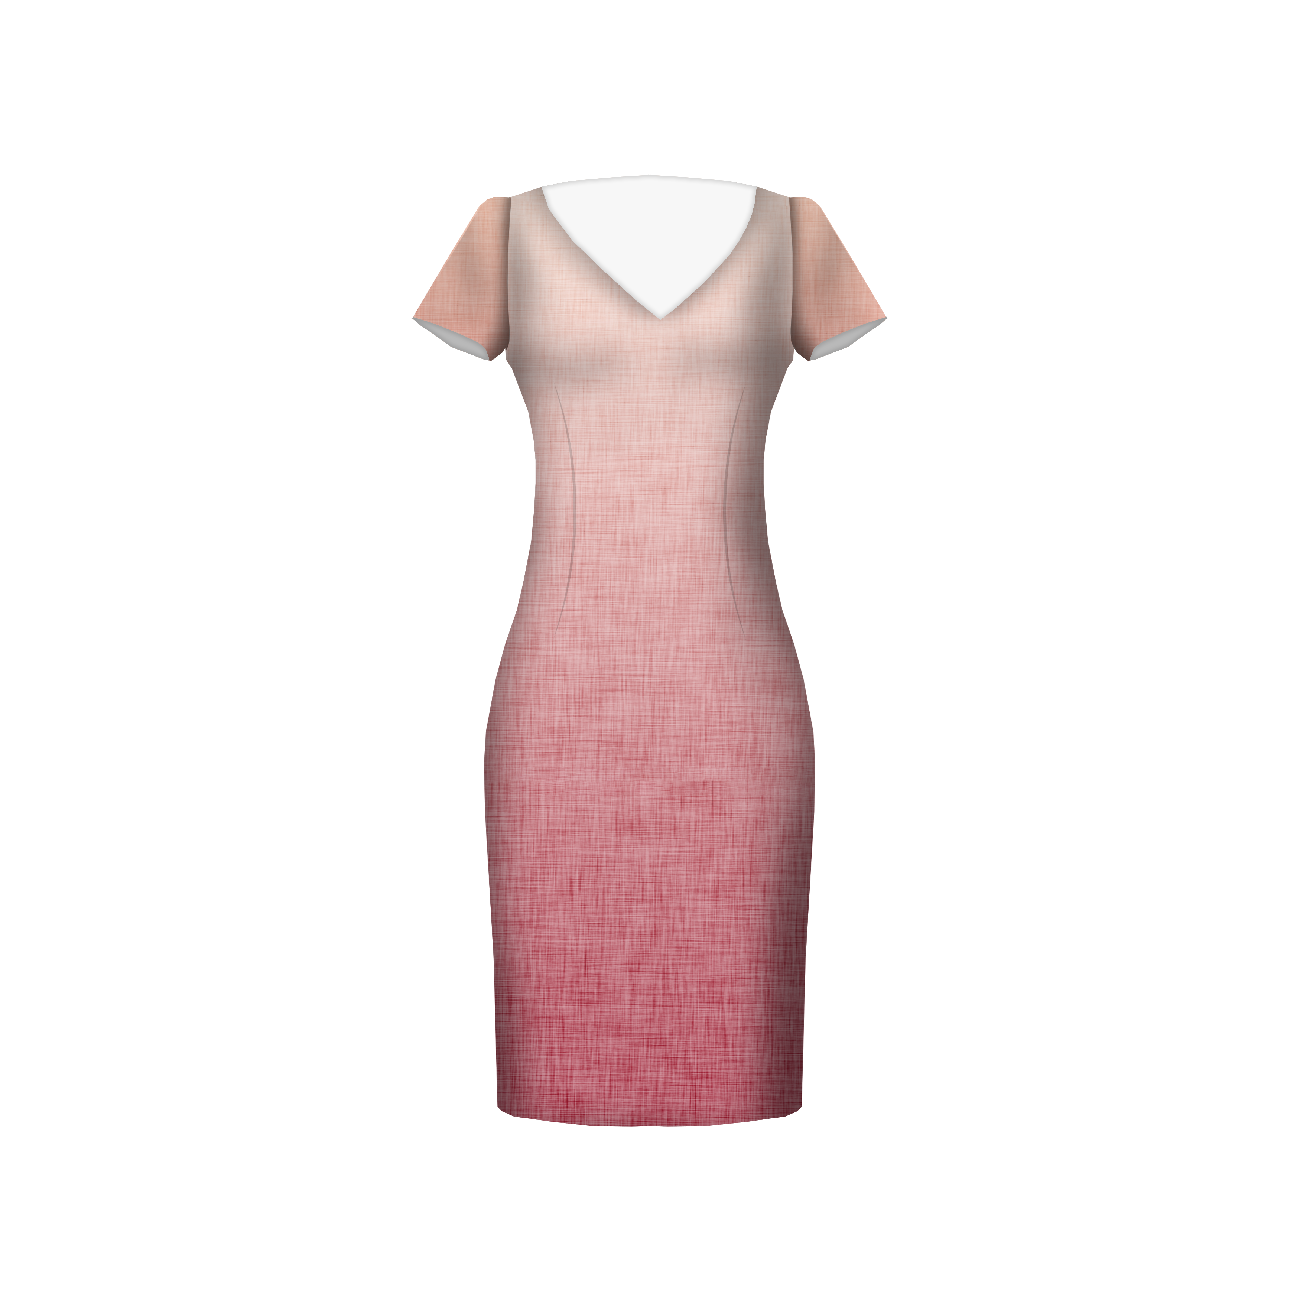 OMBRE / ACID WASH - fuchsie (blass rosa) - Kleid-Panel TE210